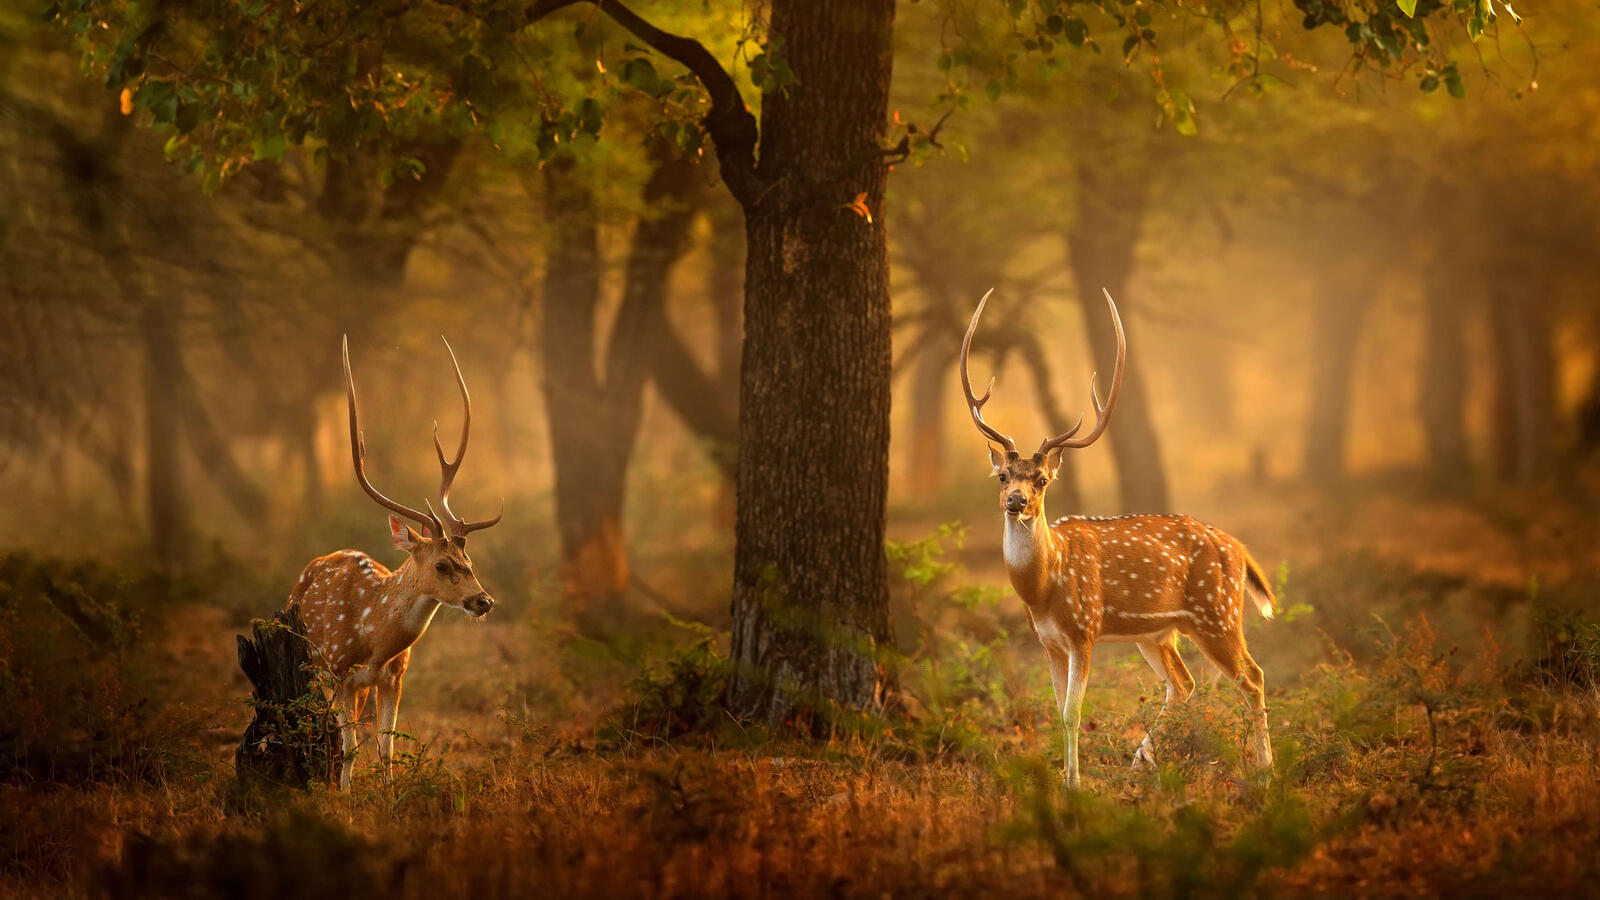 Wallpapers deer forest fairytale on the desktop